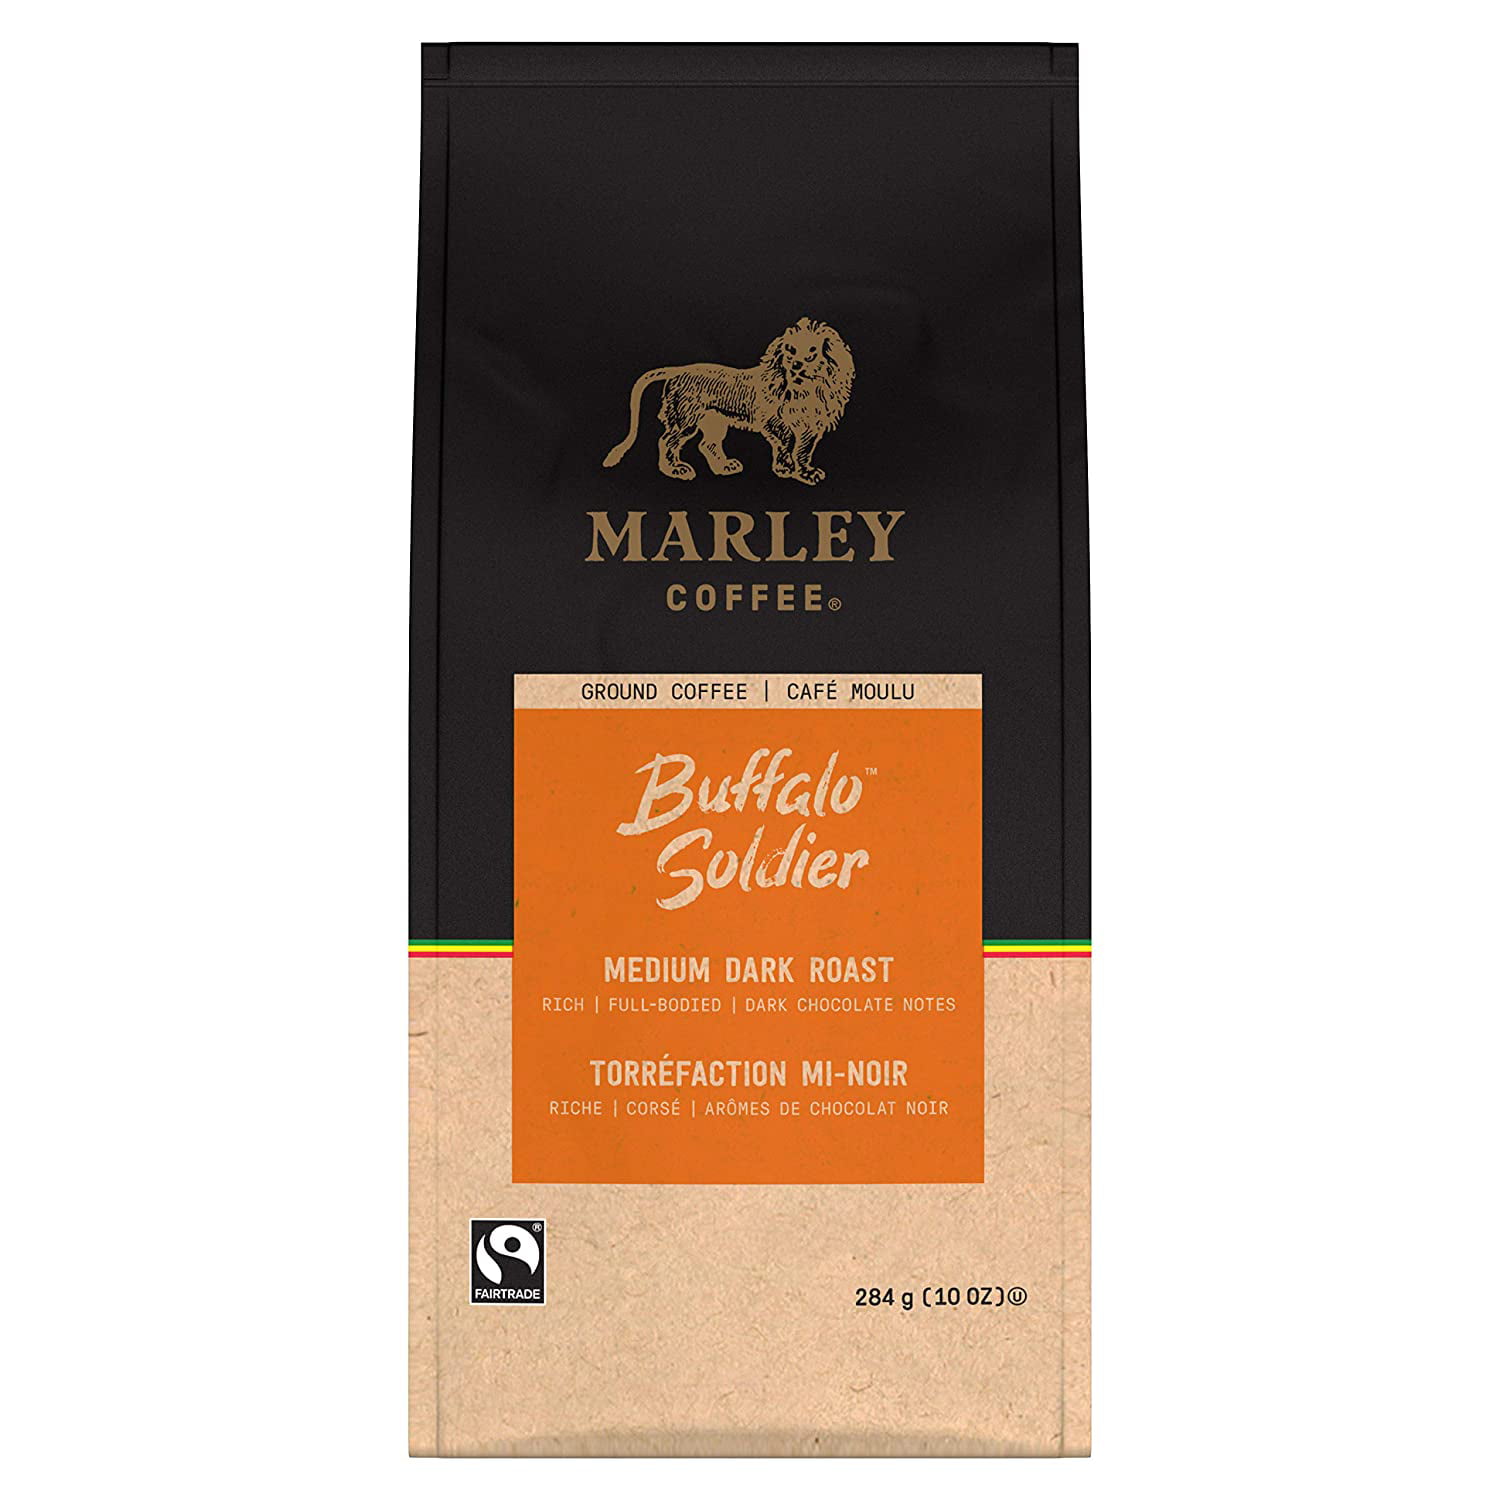 Marley Coffee Buffalo Soldier Ground Coffee, Roast, 10 Ounce (Pack of 6) - Walmart.com